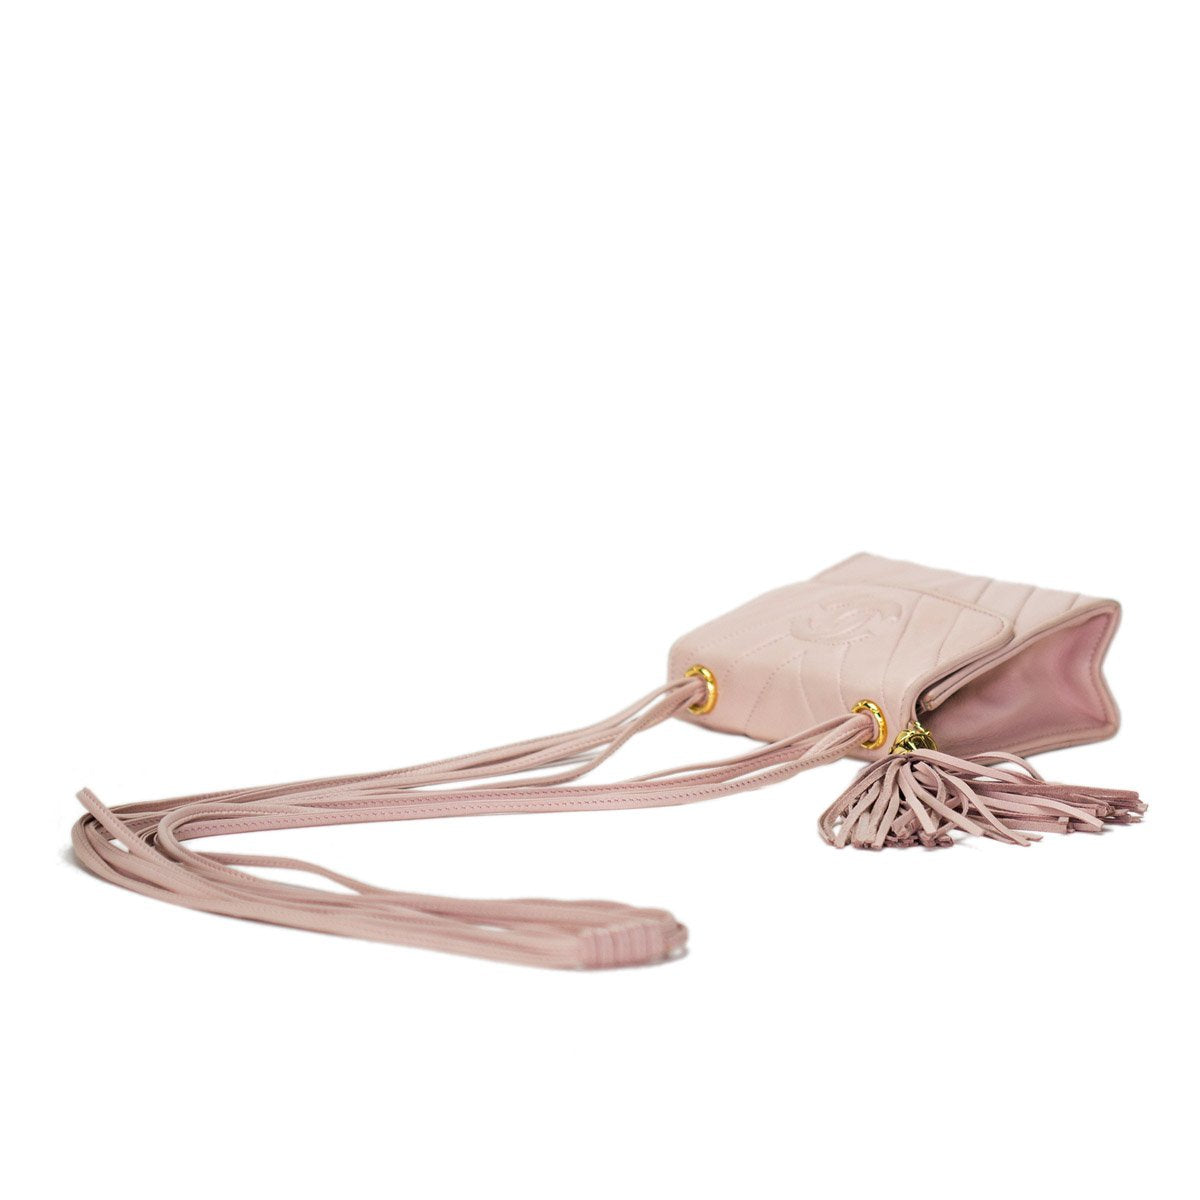 Chanel Soft Pink Chevron Fringe Lambskin Flap Bag